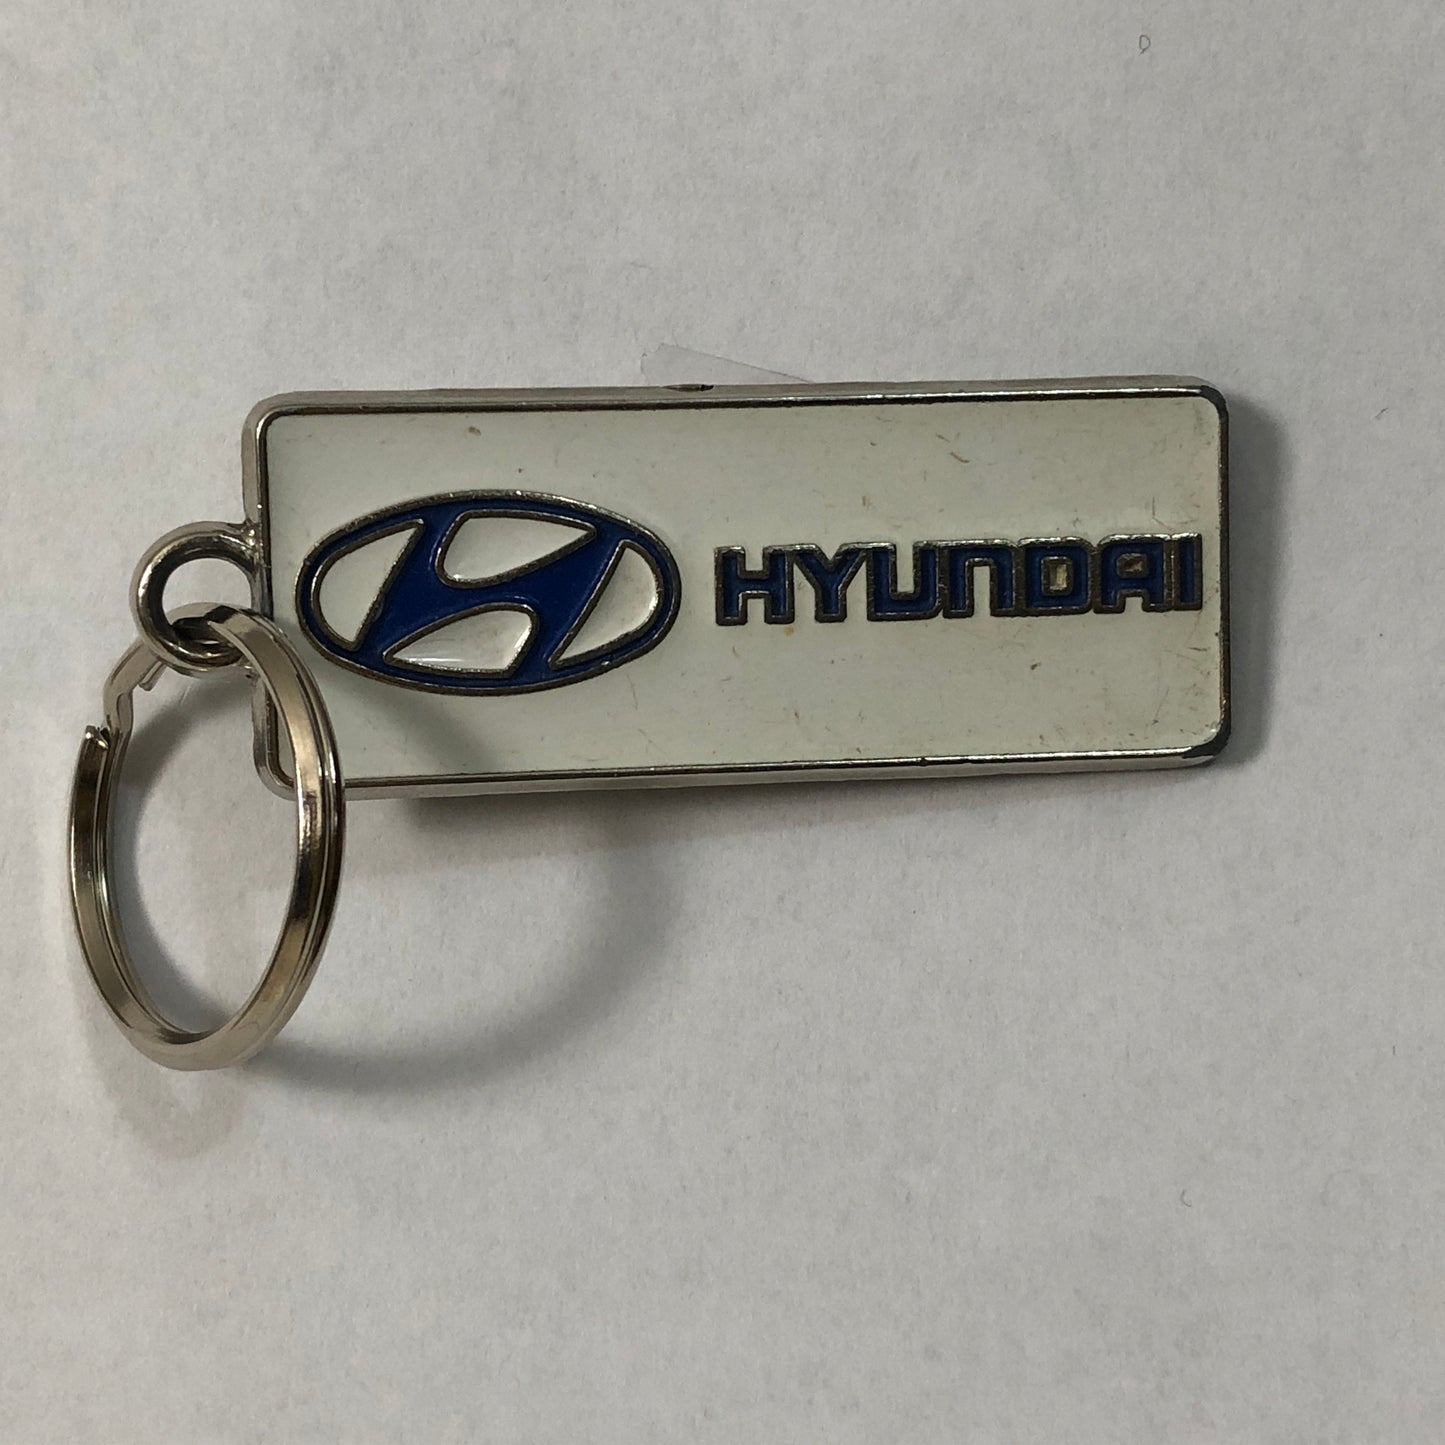 Hyundai, Portachiavi in Metallo con Finitura Smaltata con Logo e Scritta Hyundai - Raggi's Collectibles' Automotive Art